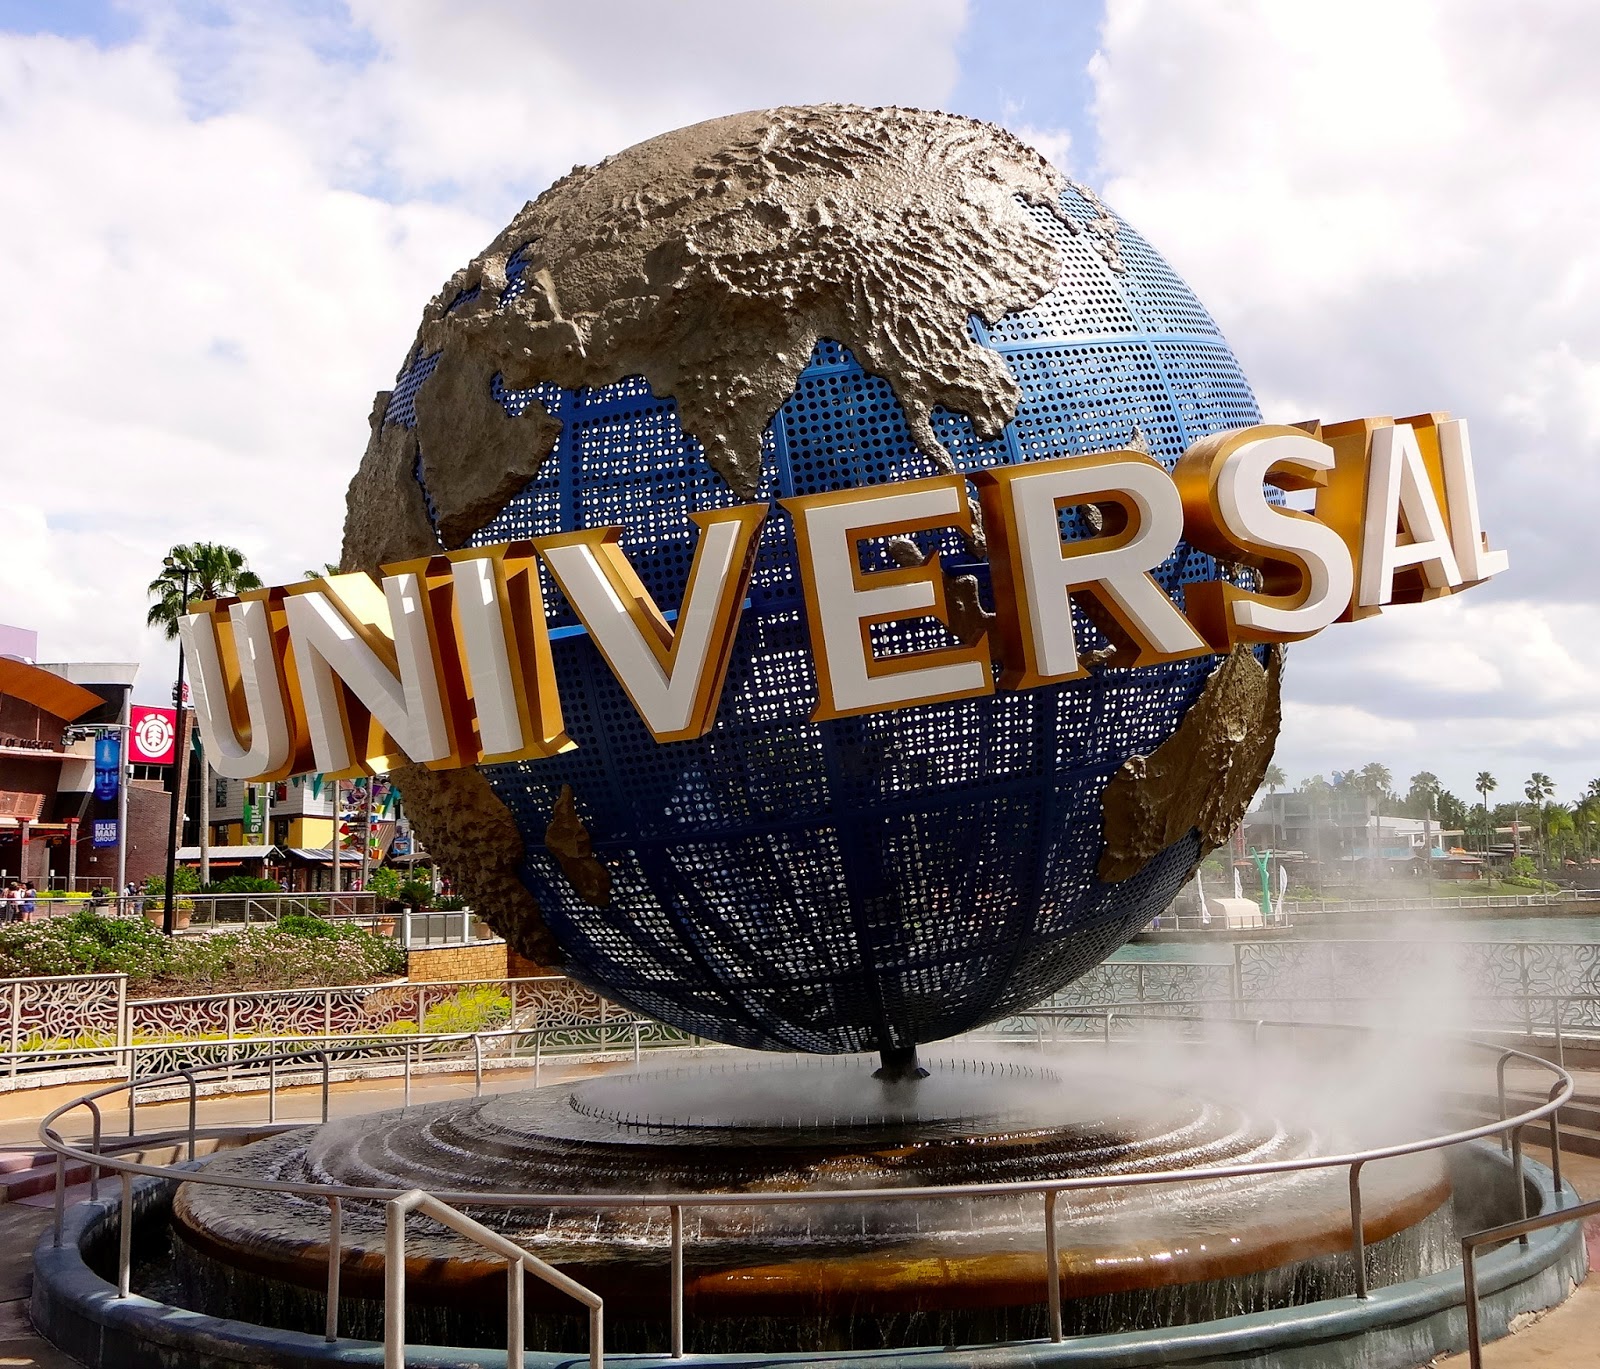 Disney World vs Universal Studios - Comparing Orlando's Theme Park